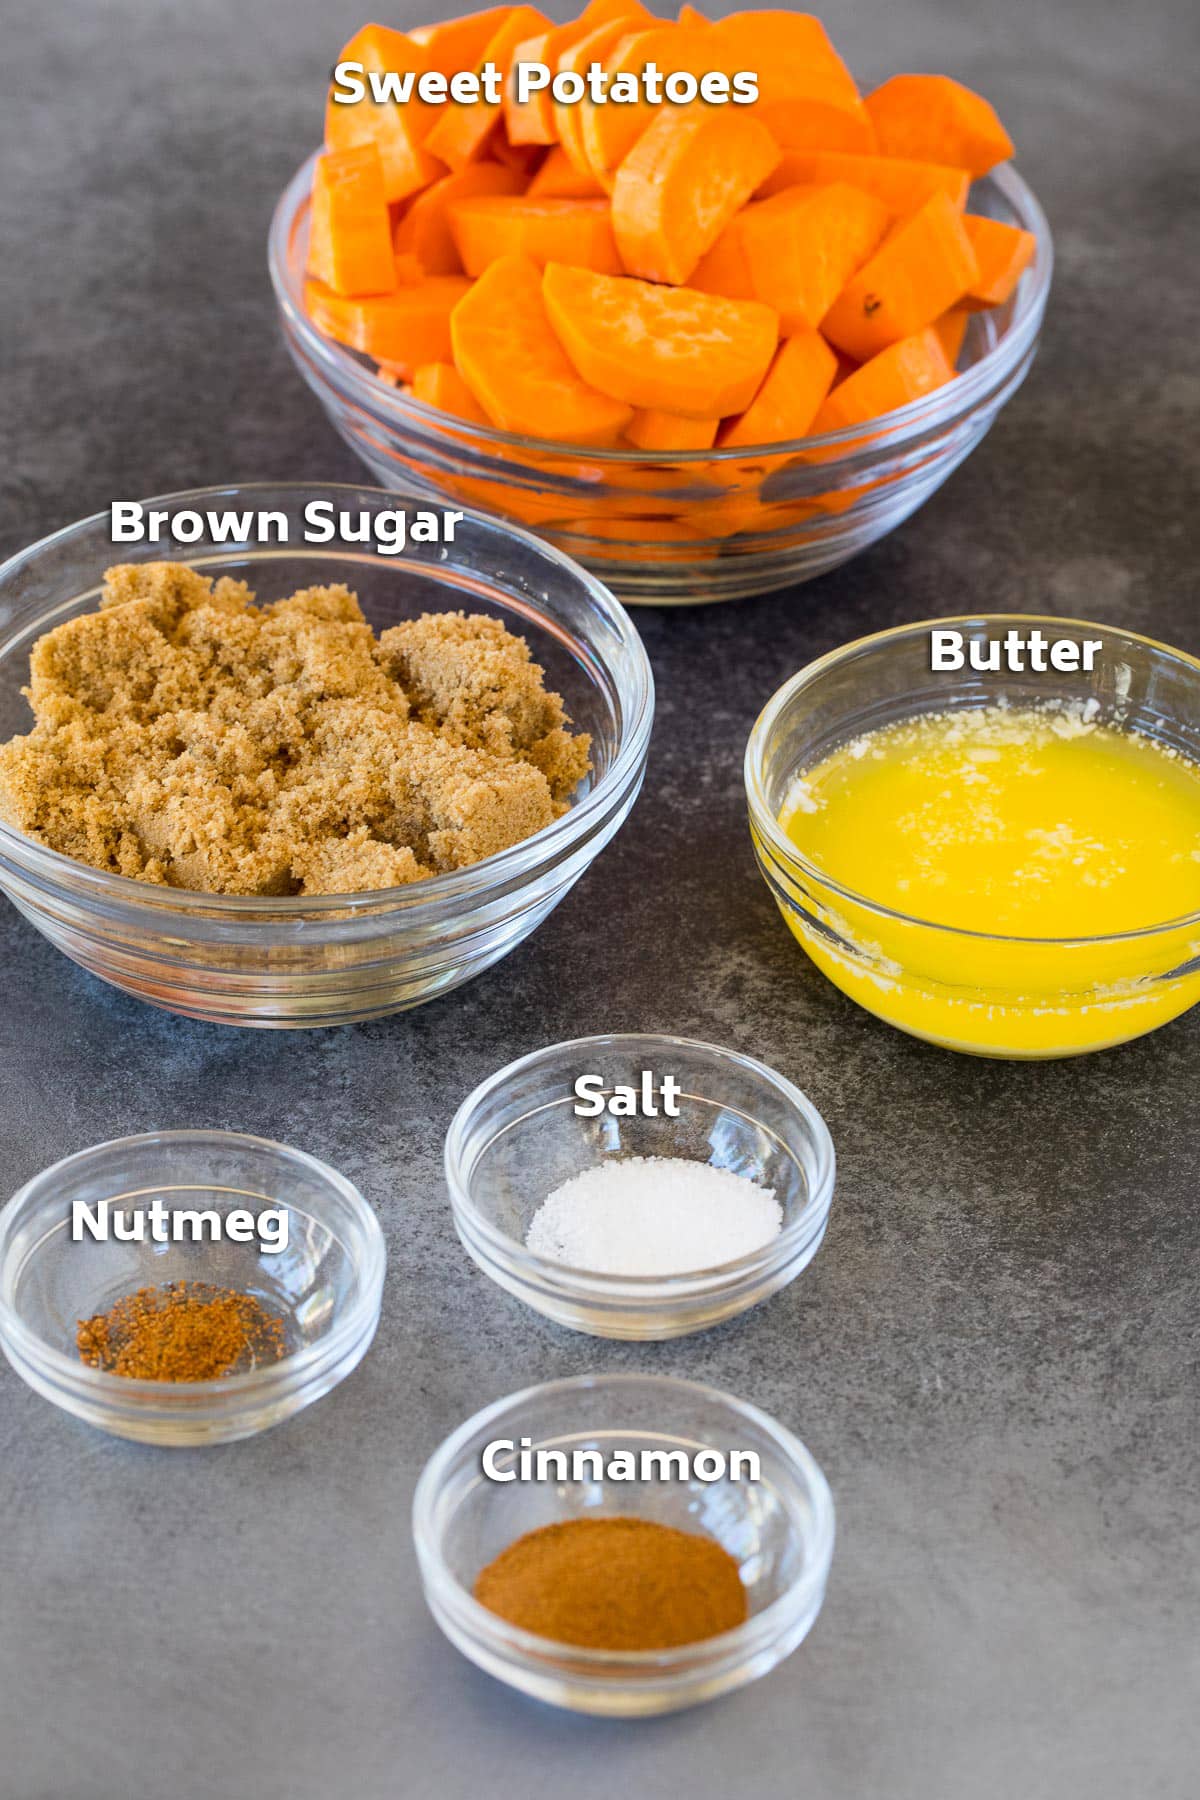 Bowls of ingredients including sweet potatoes, butter, brown sugar and seasonings.